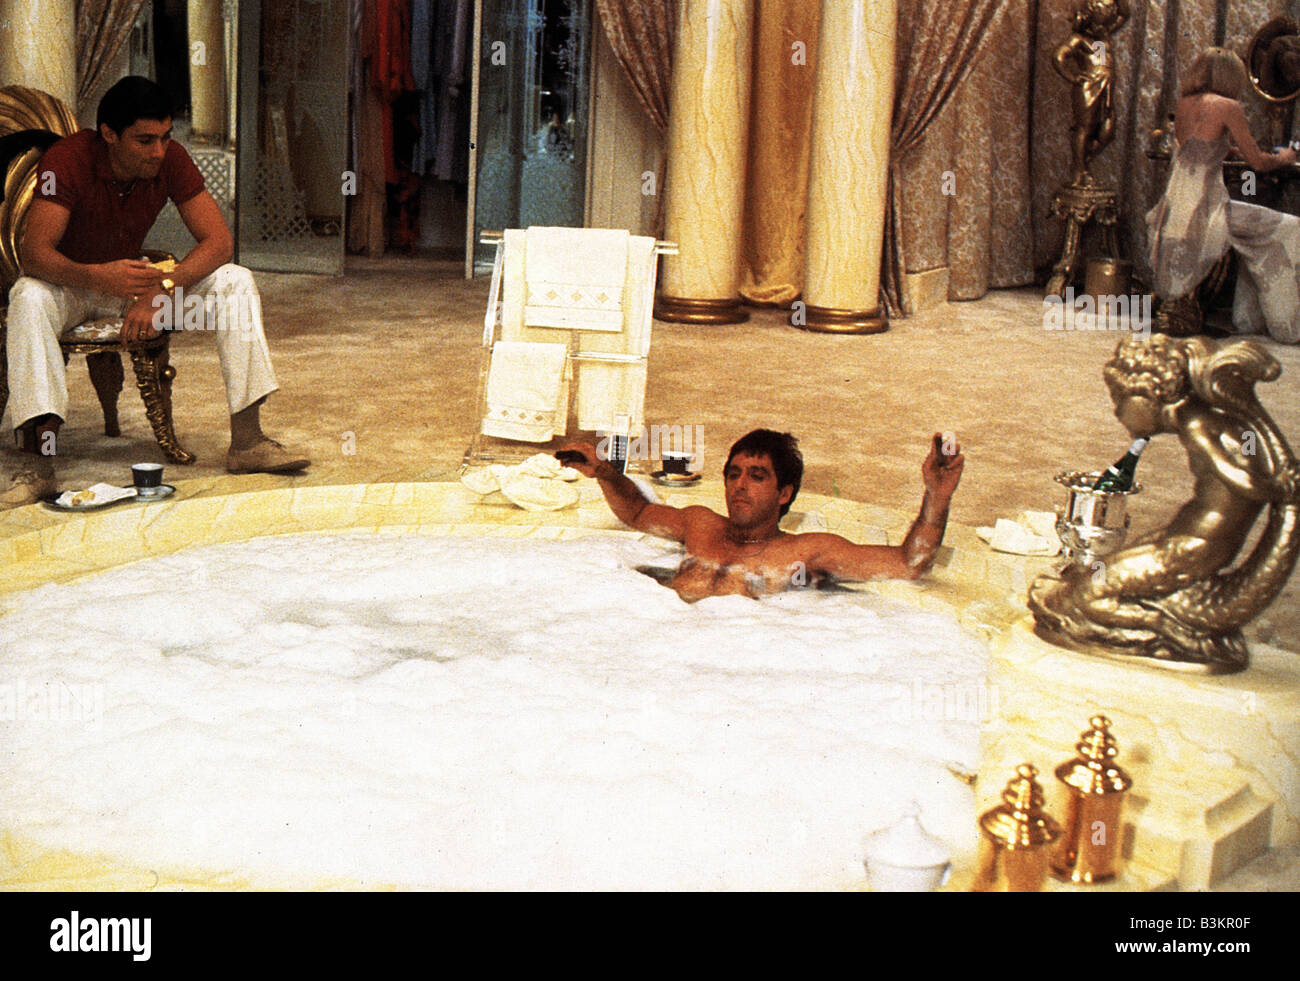 SCARFACE 1983 Universal film with Al Pacino Stock Photo